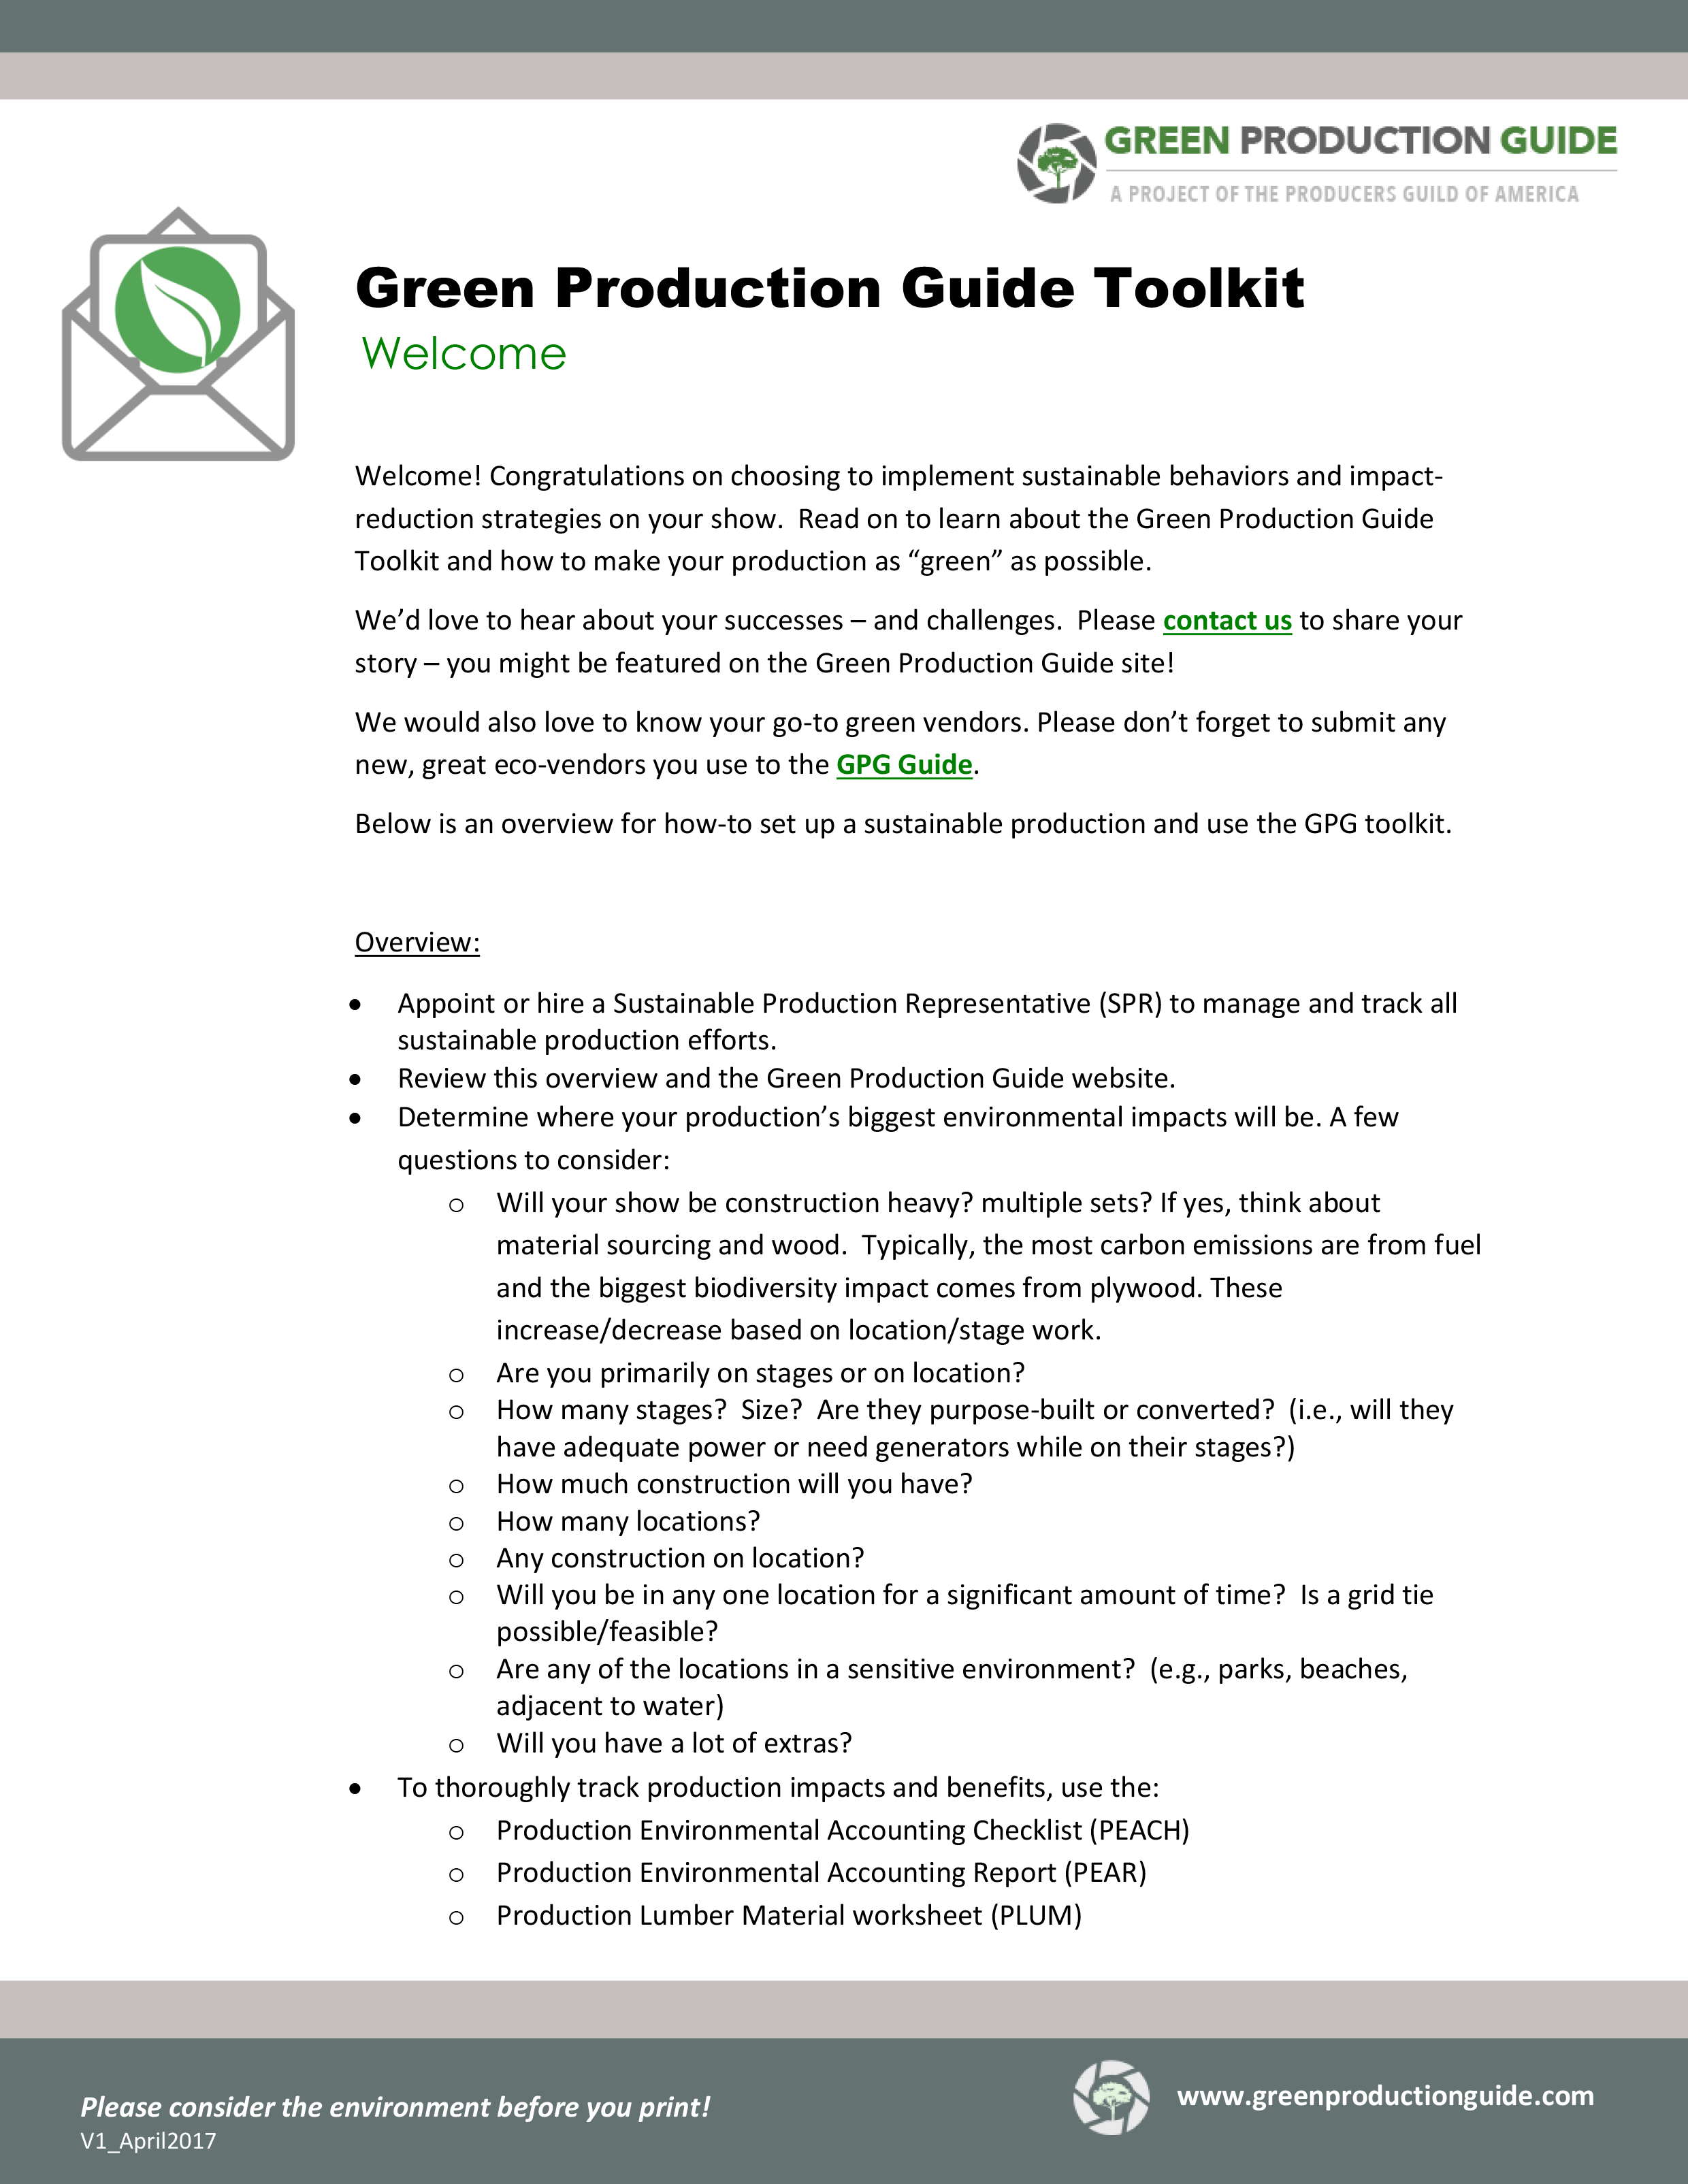 Greenn Guide Tool Kit